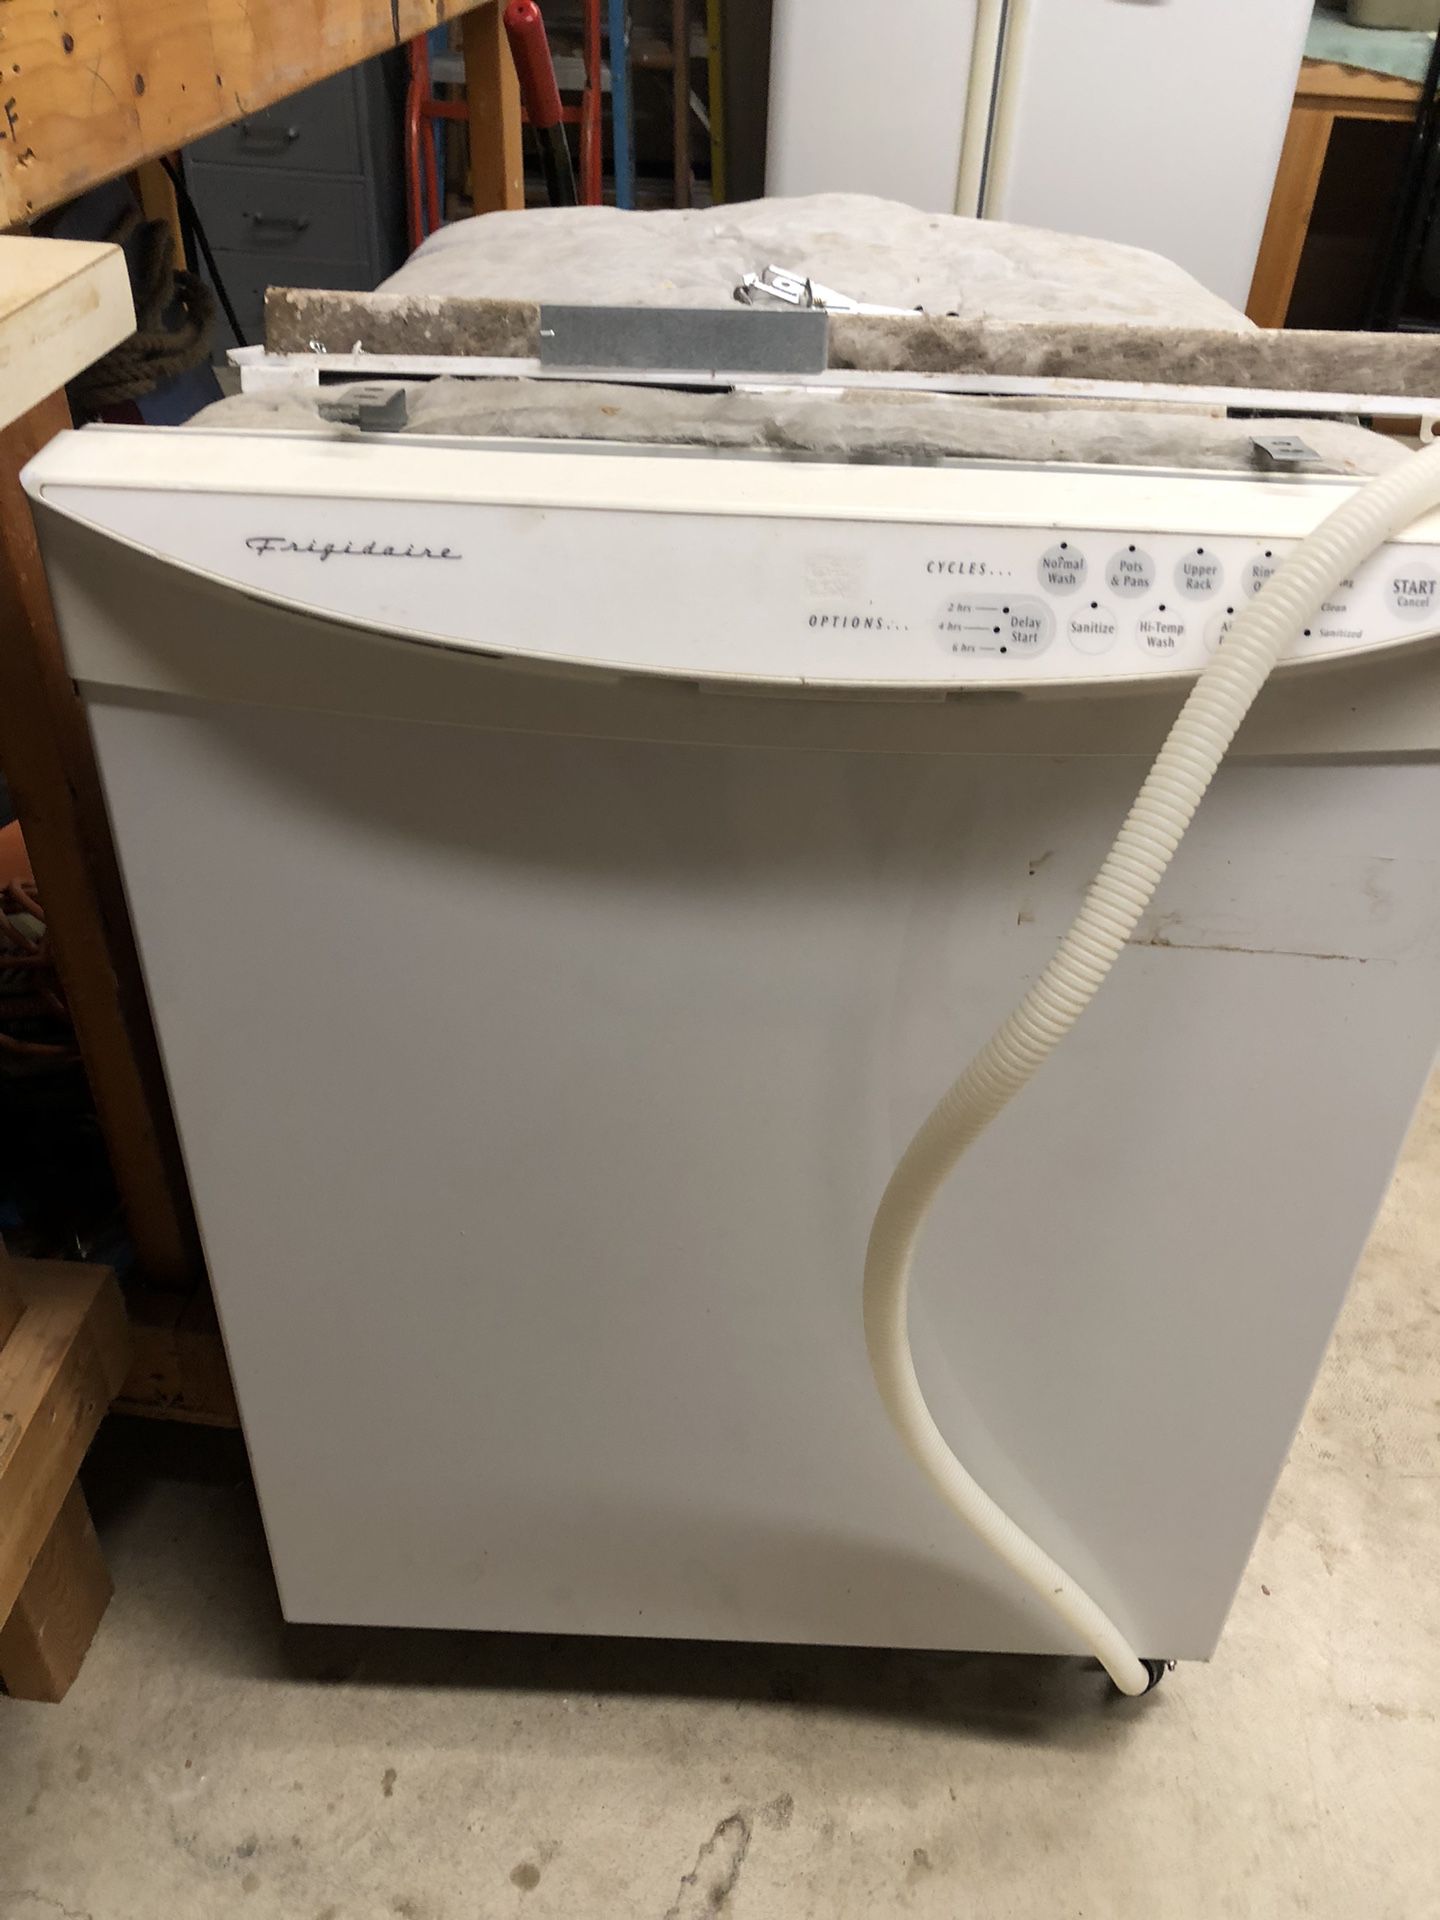 Frigidare dishwasher- Solid Working Condition